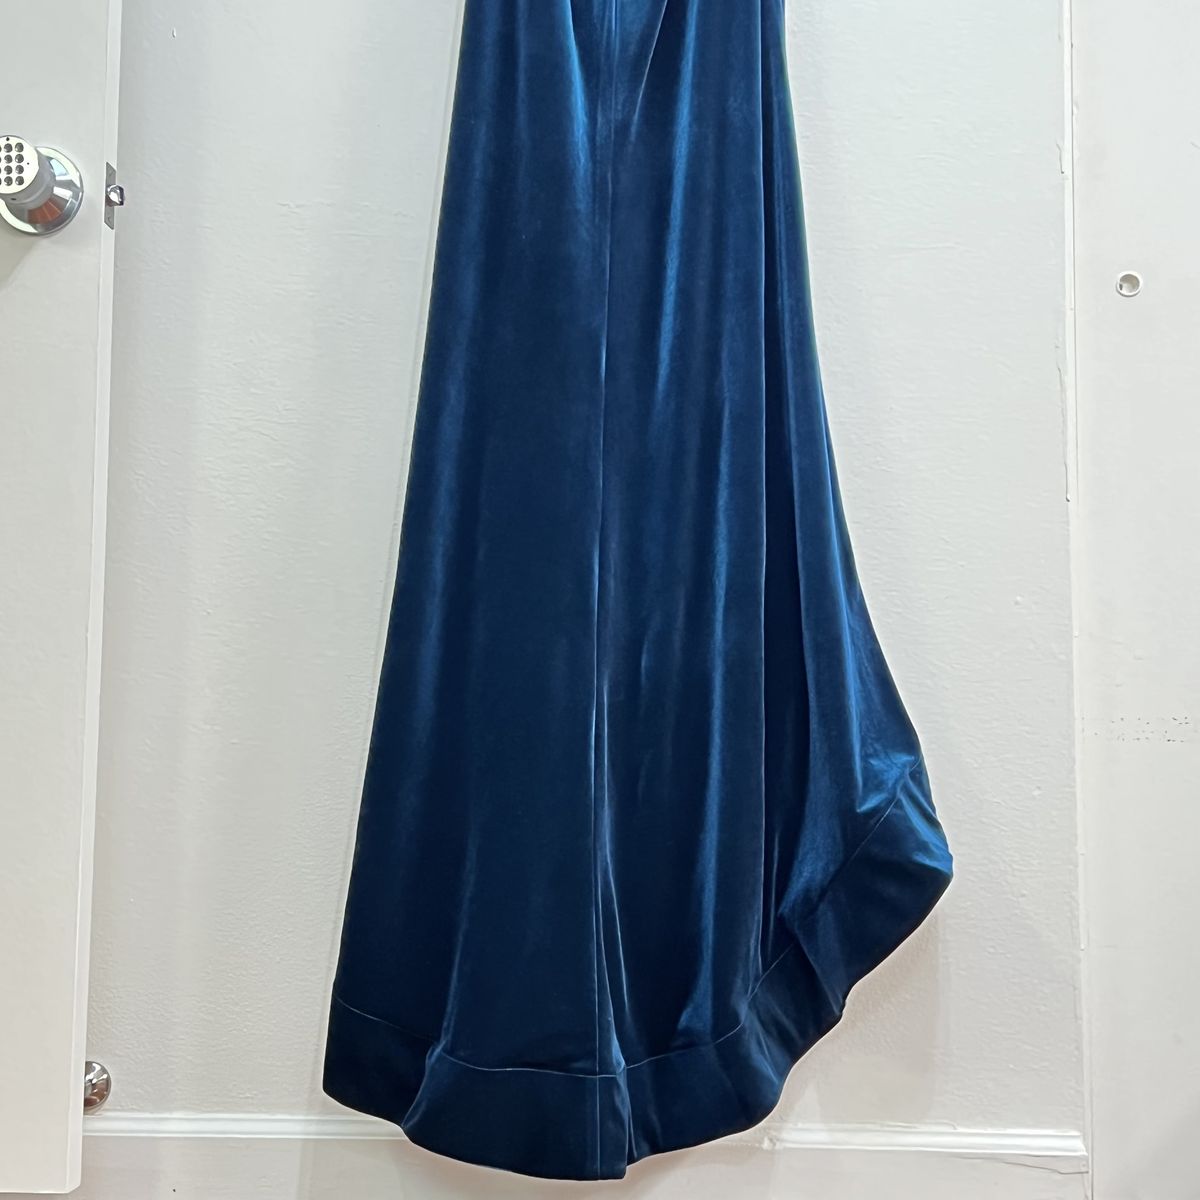 Style 24626 La Femme Size 8 Off The Shoulder Velvet Blue Floor Length Maxi on Queenly